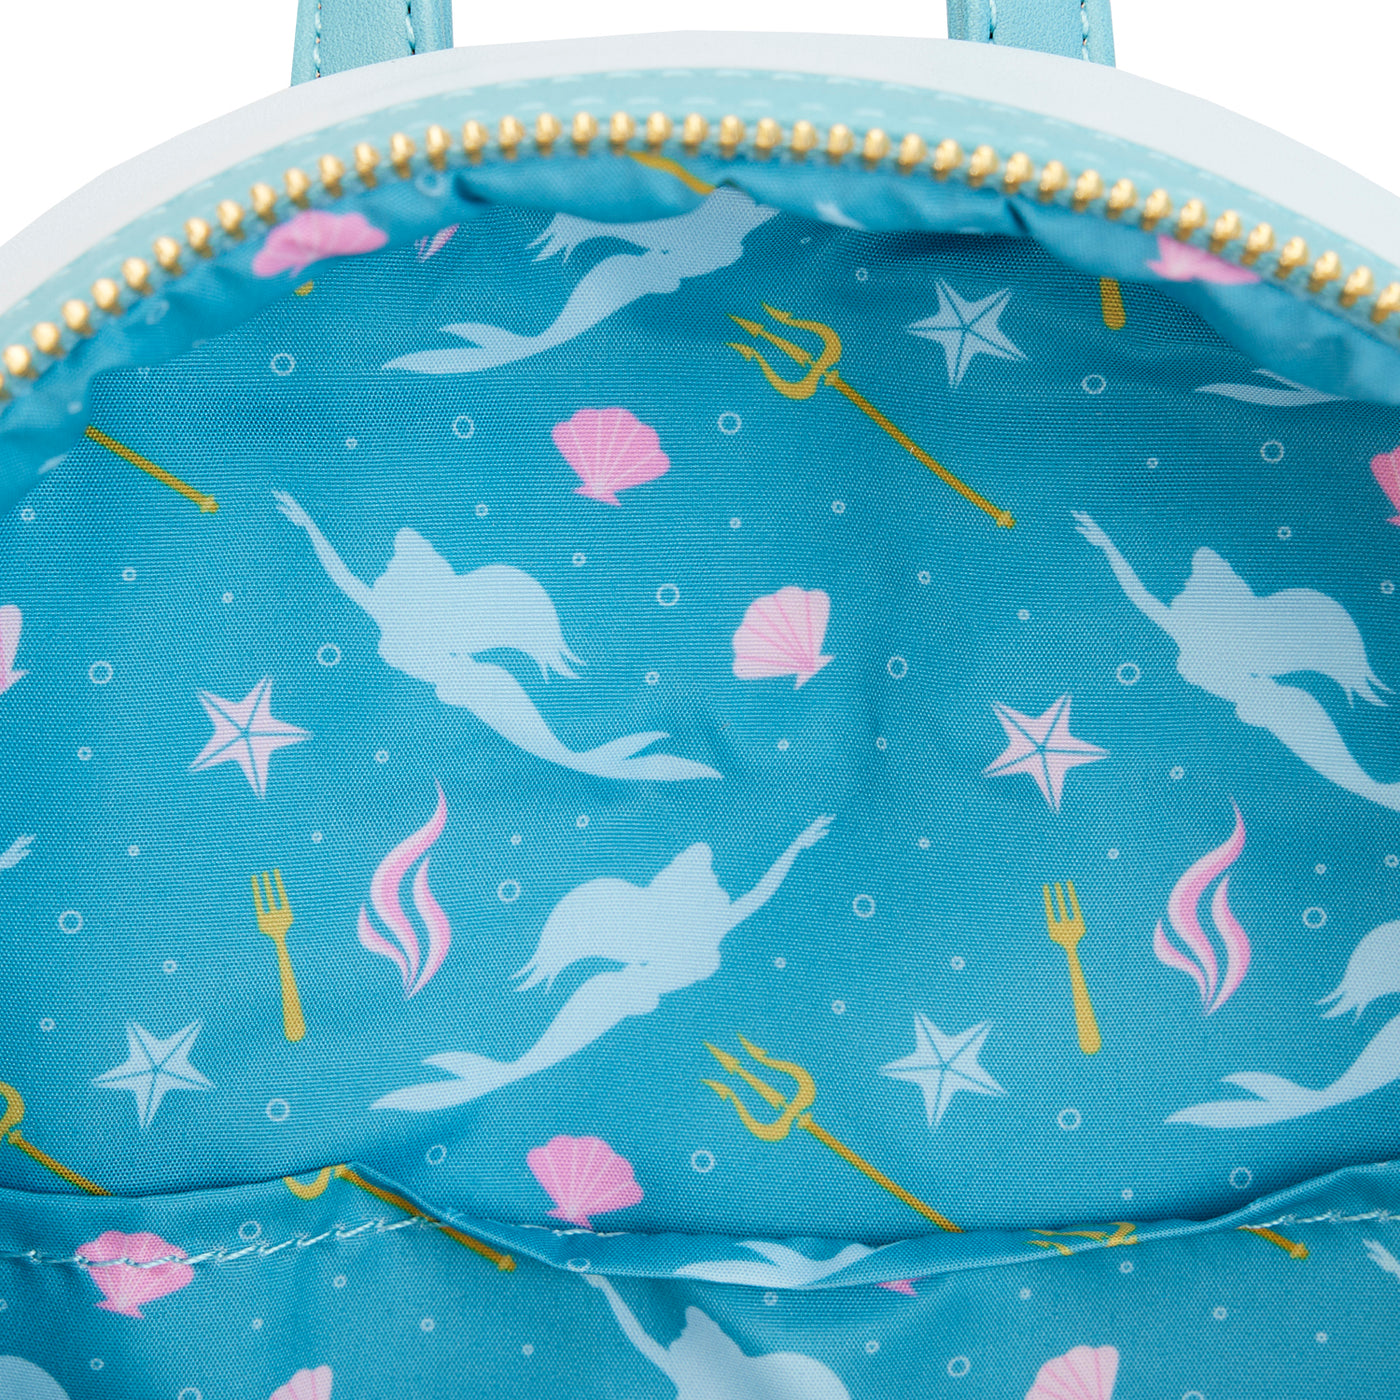 Disney The Little Mermaid Tritons Gift Mini Backpack